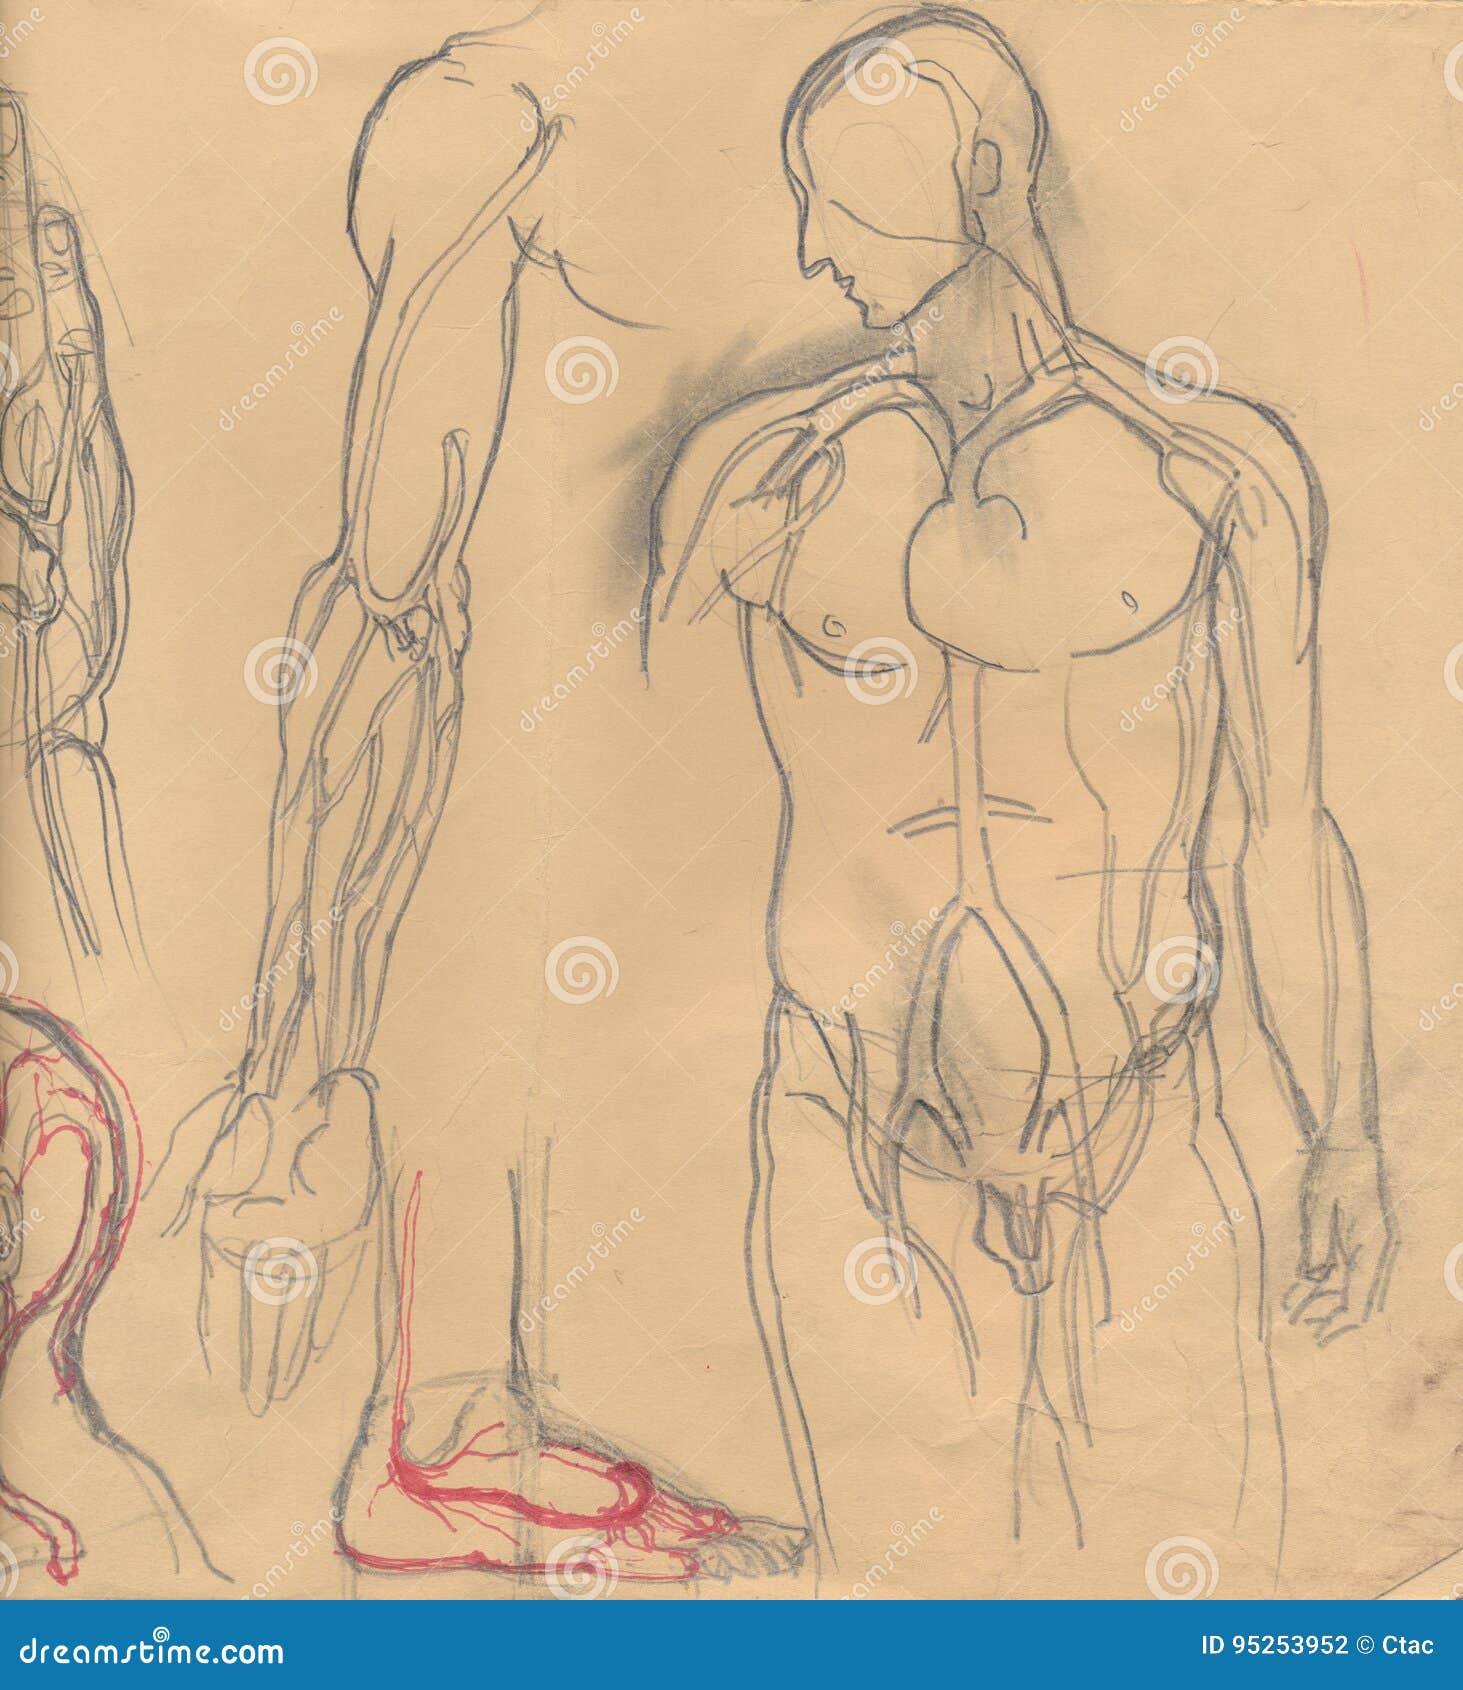 Basic Manga Anatomy Tutorial | Drawing Referenc...